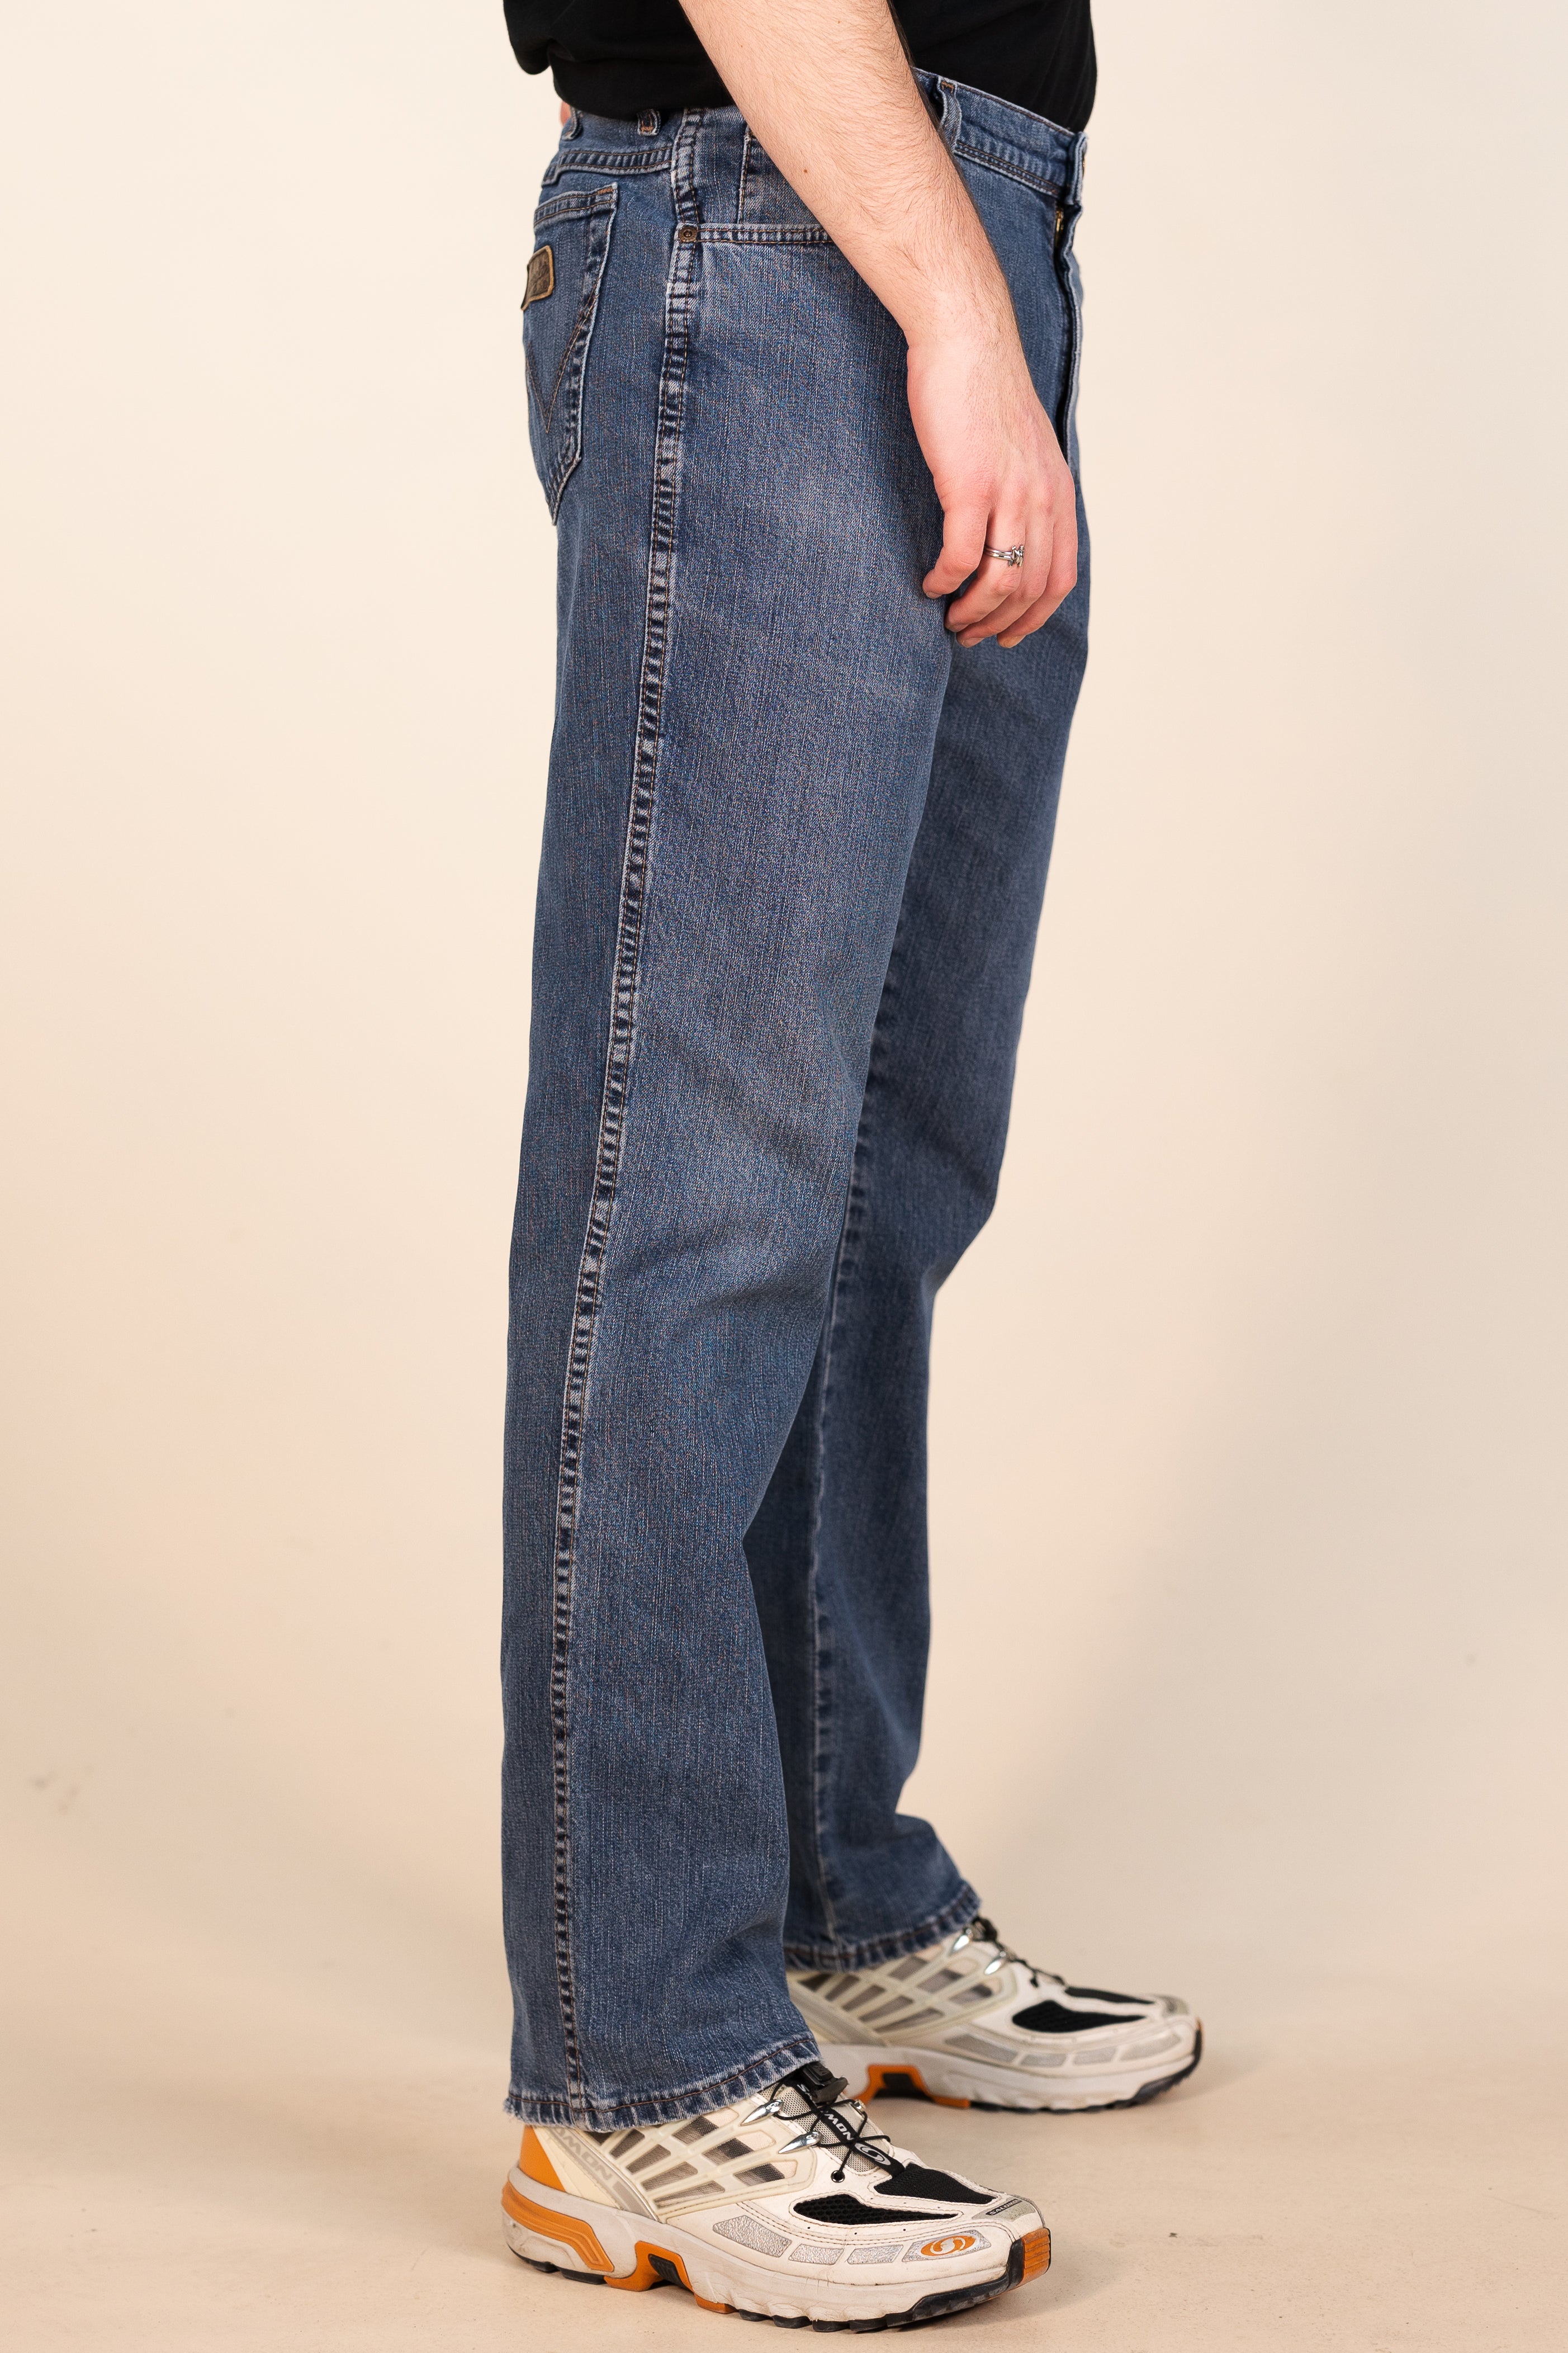 Wrangler 'Texas Stretch' Fit Jeans